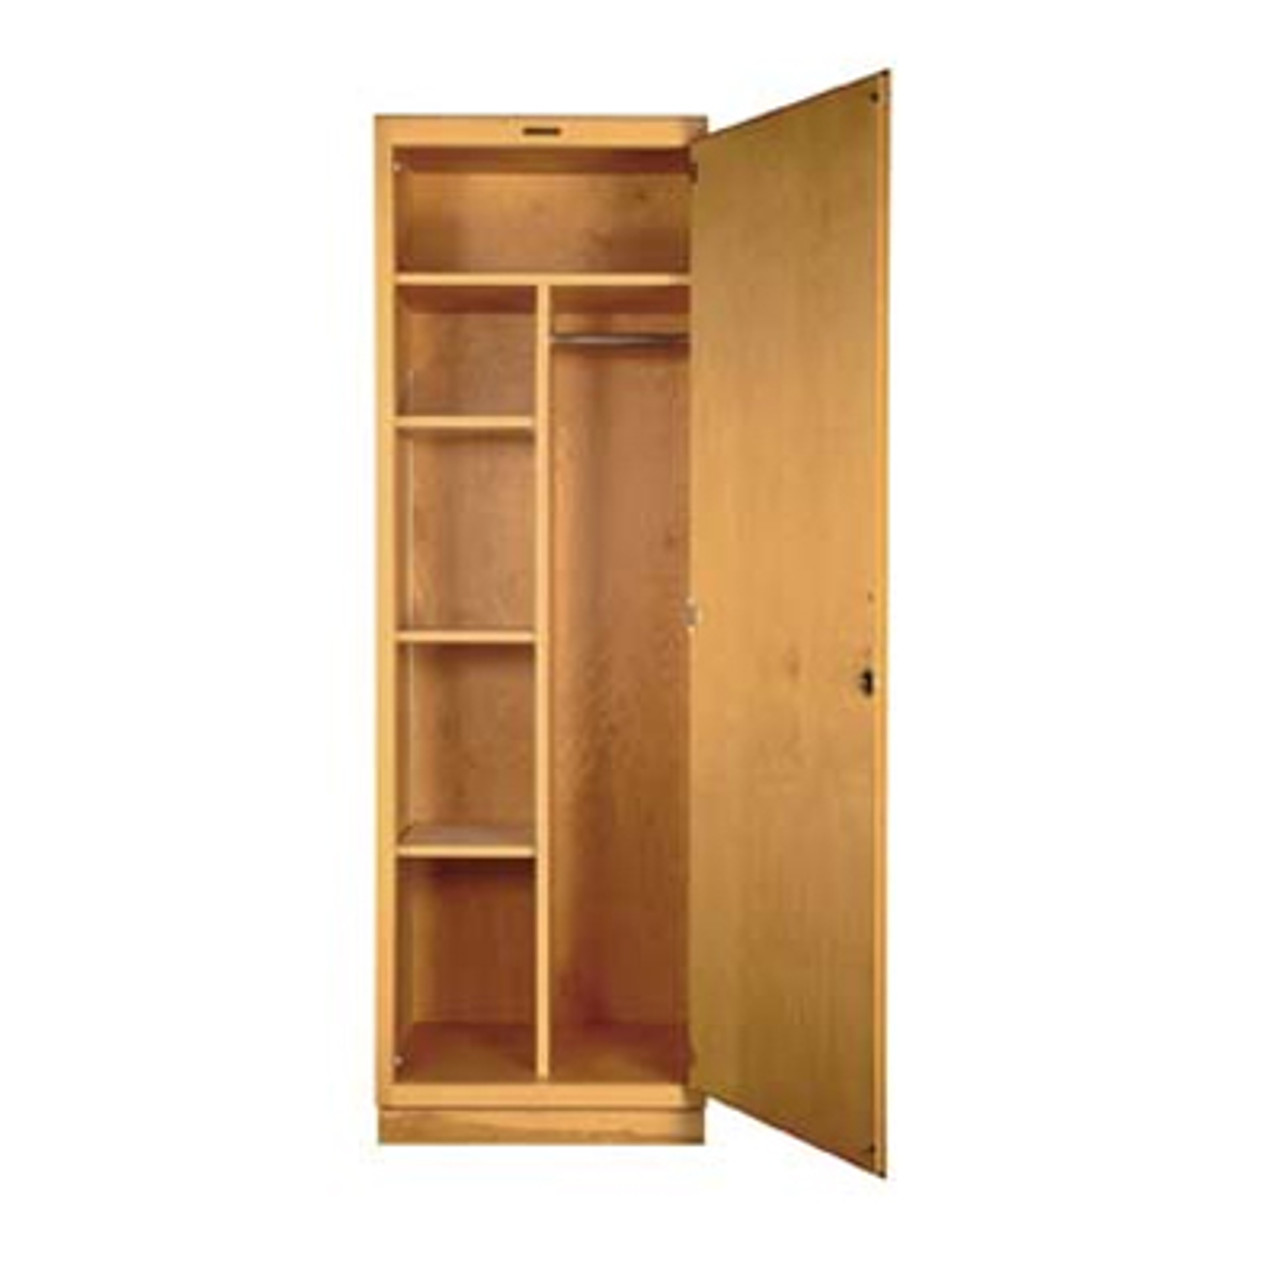 Hann Large Capacity Storage Cabinets